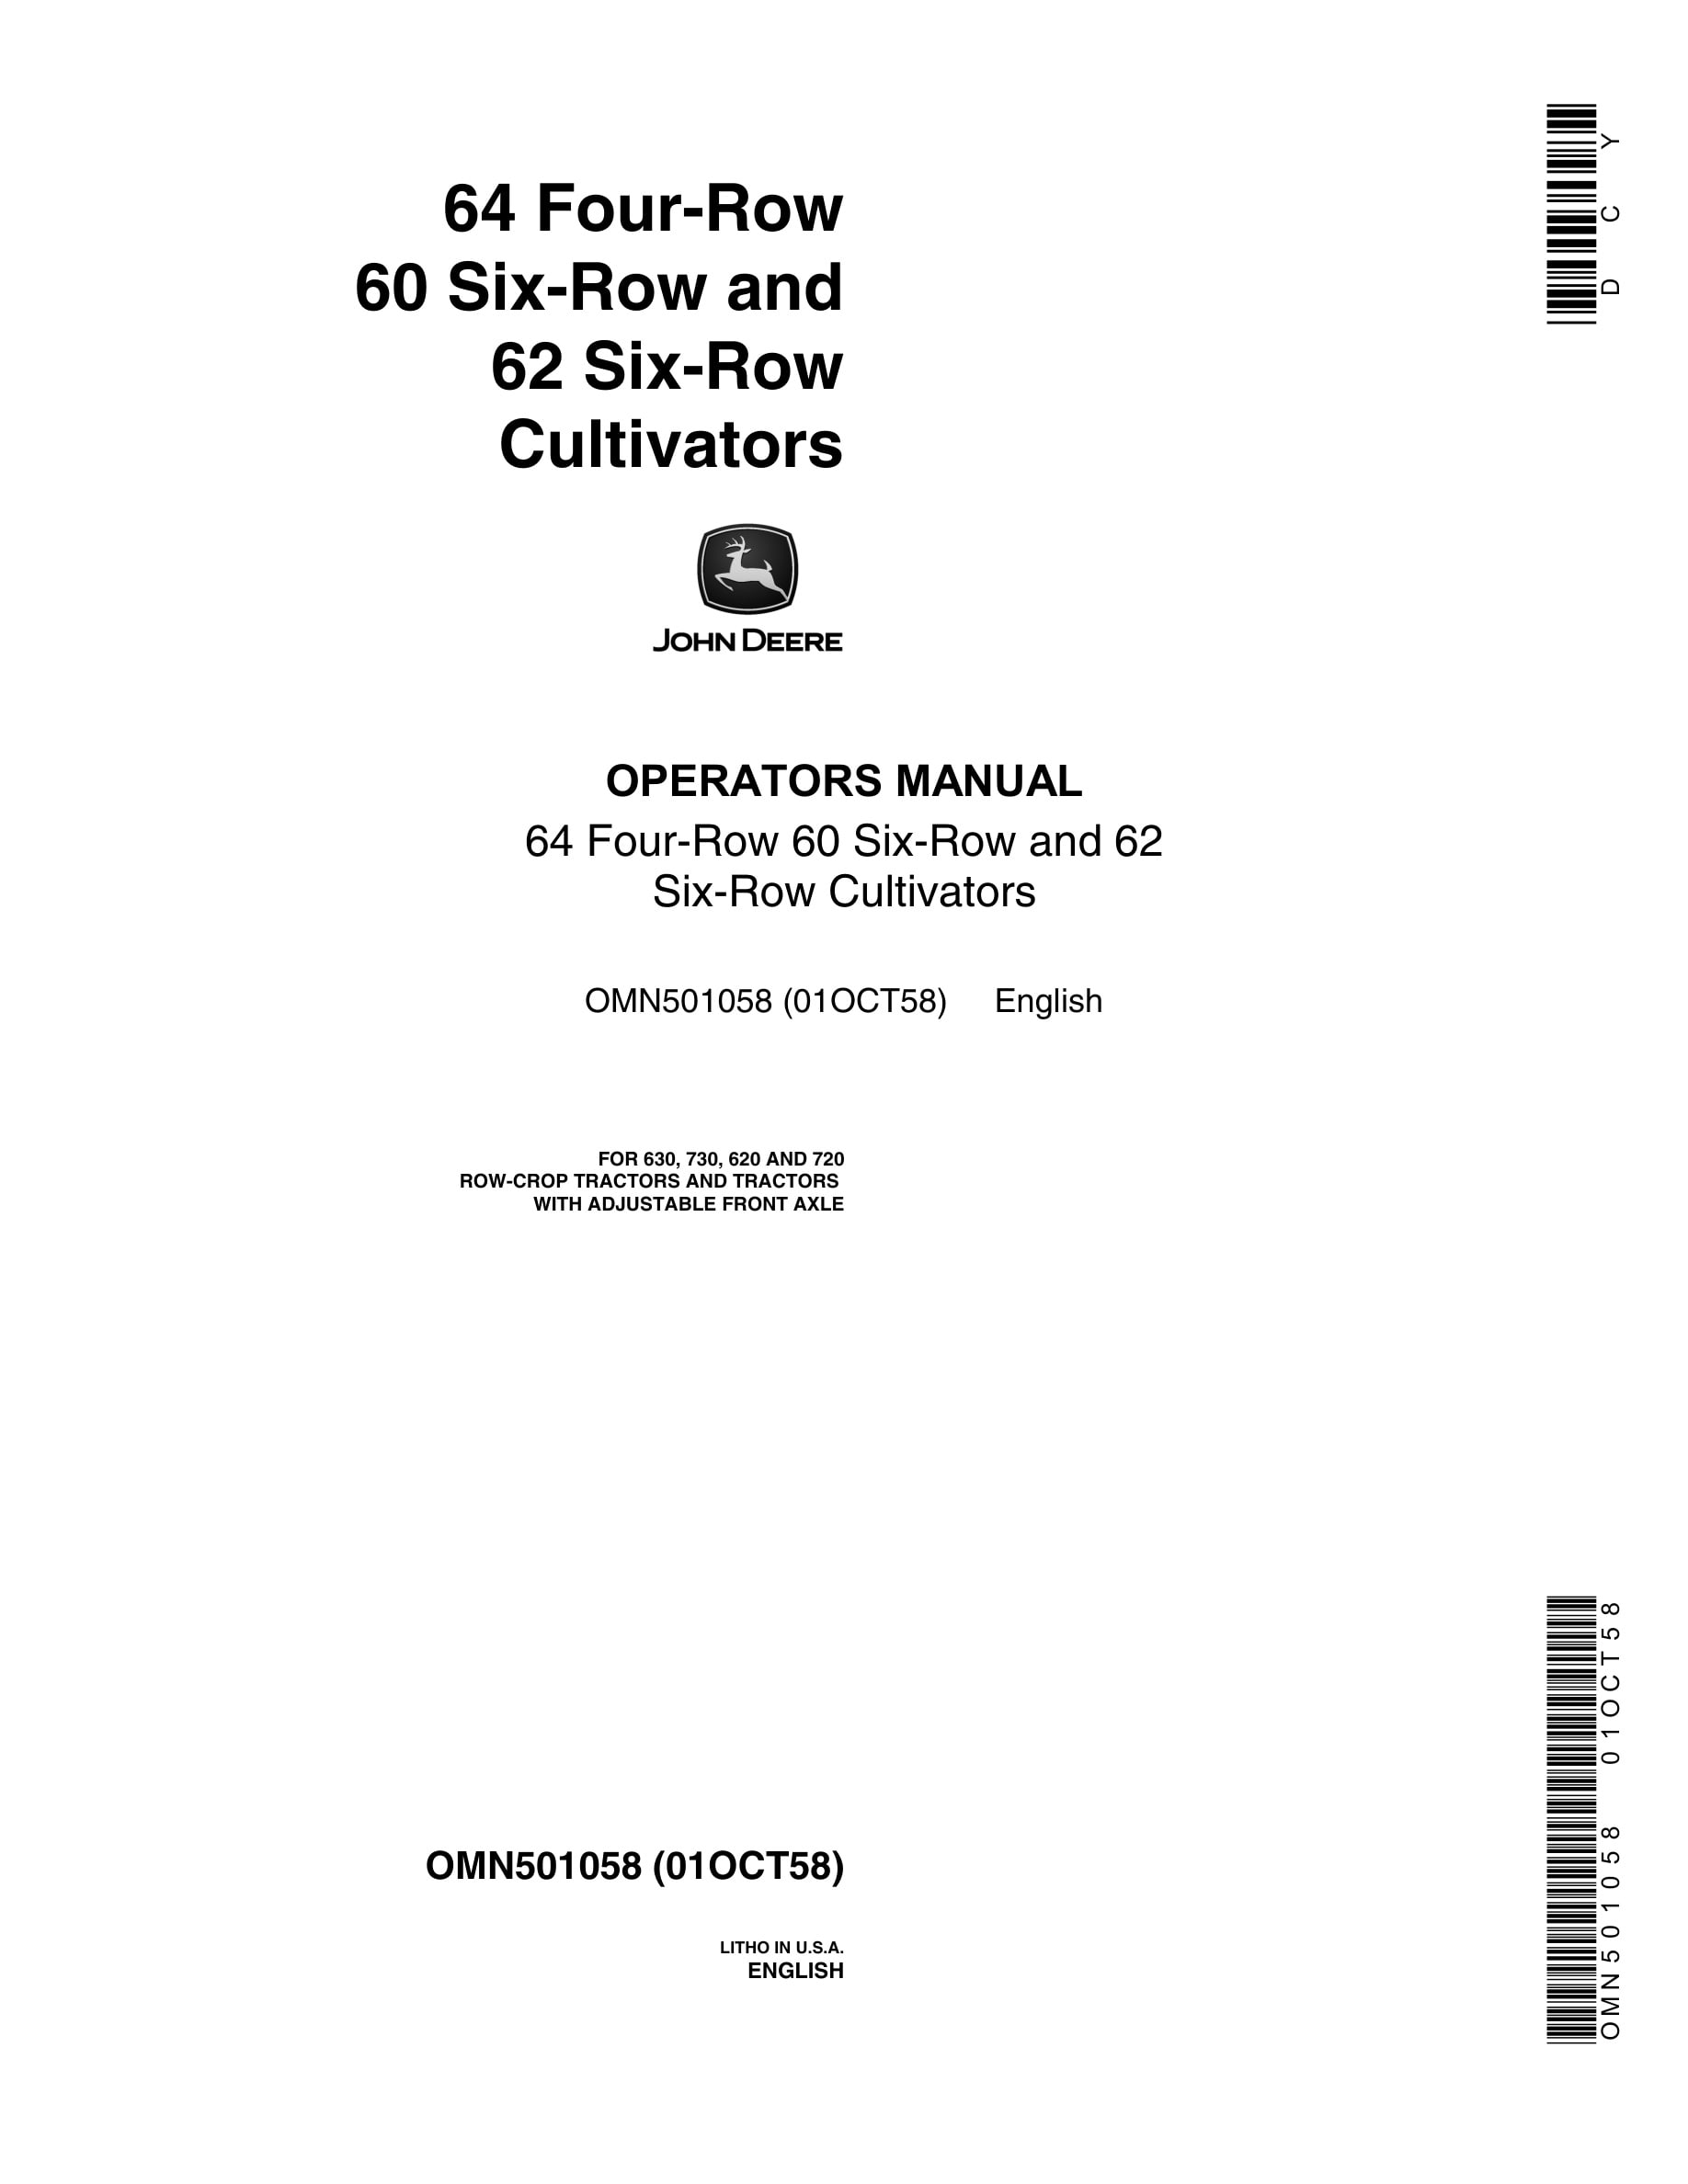 John Deere 64 Four-Row 60 Six-Row and 62 Six-Row CULTIVATOR Operator Manual OMN501058-1